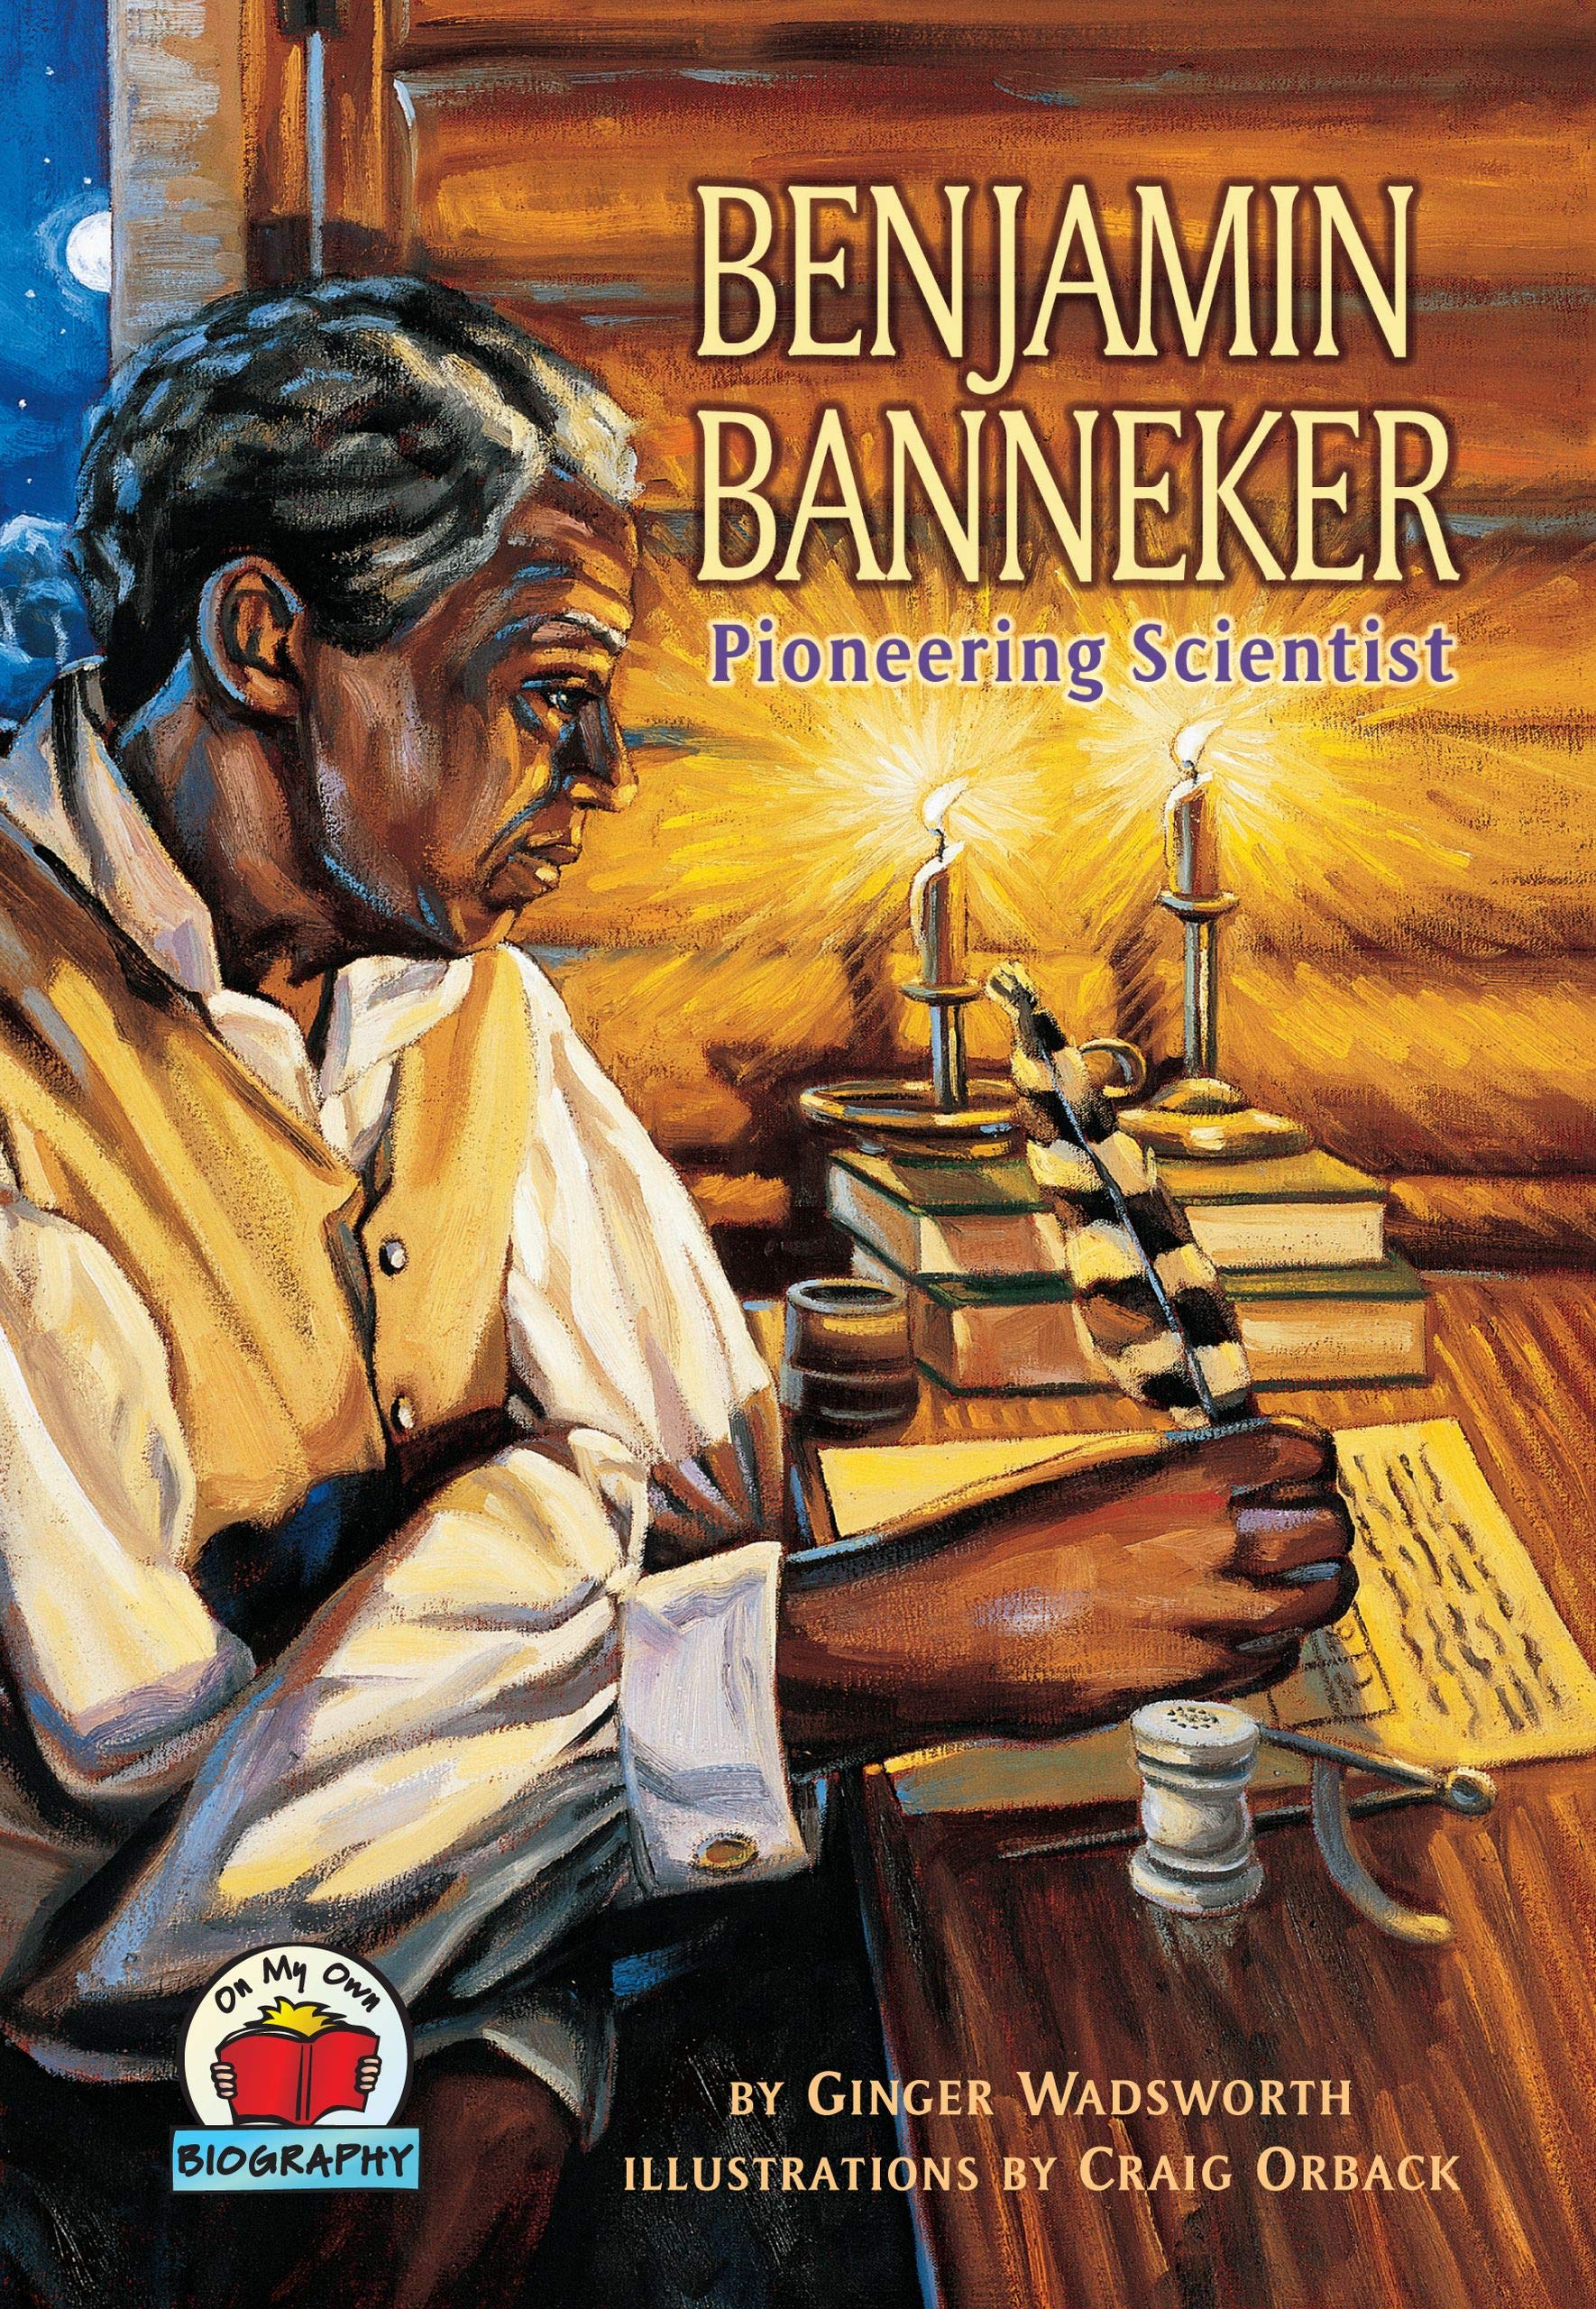 Benjamin Banneker—Pioneering Scientist